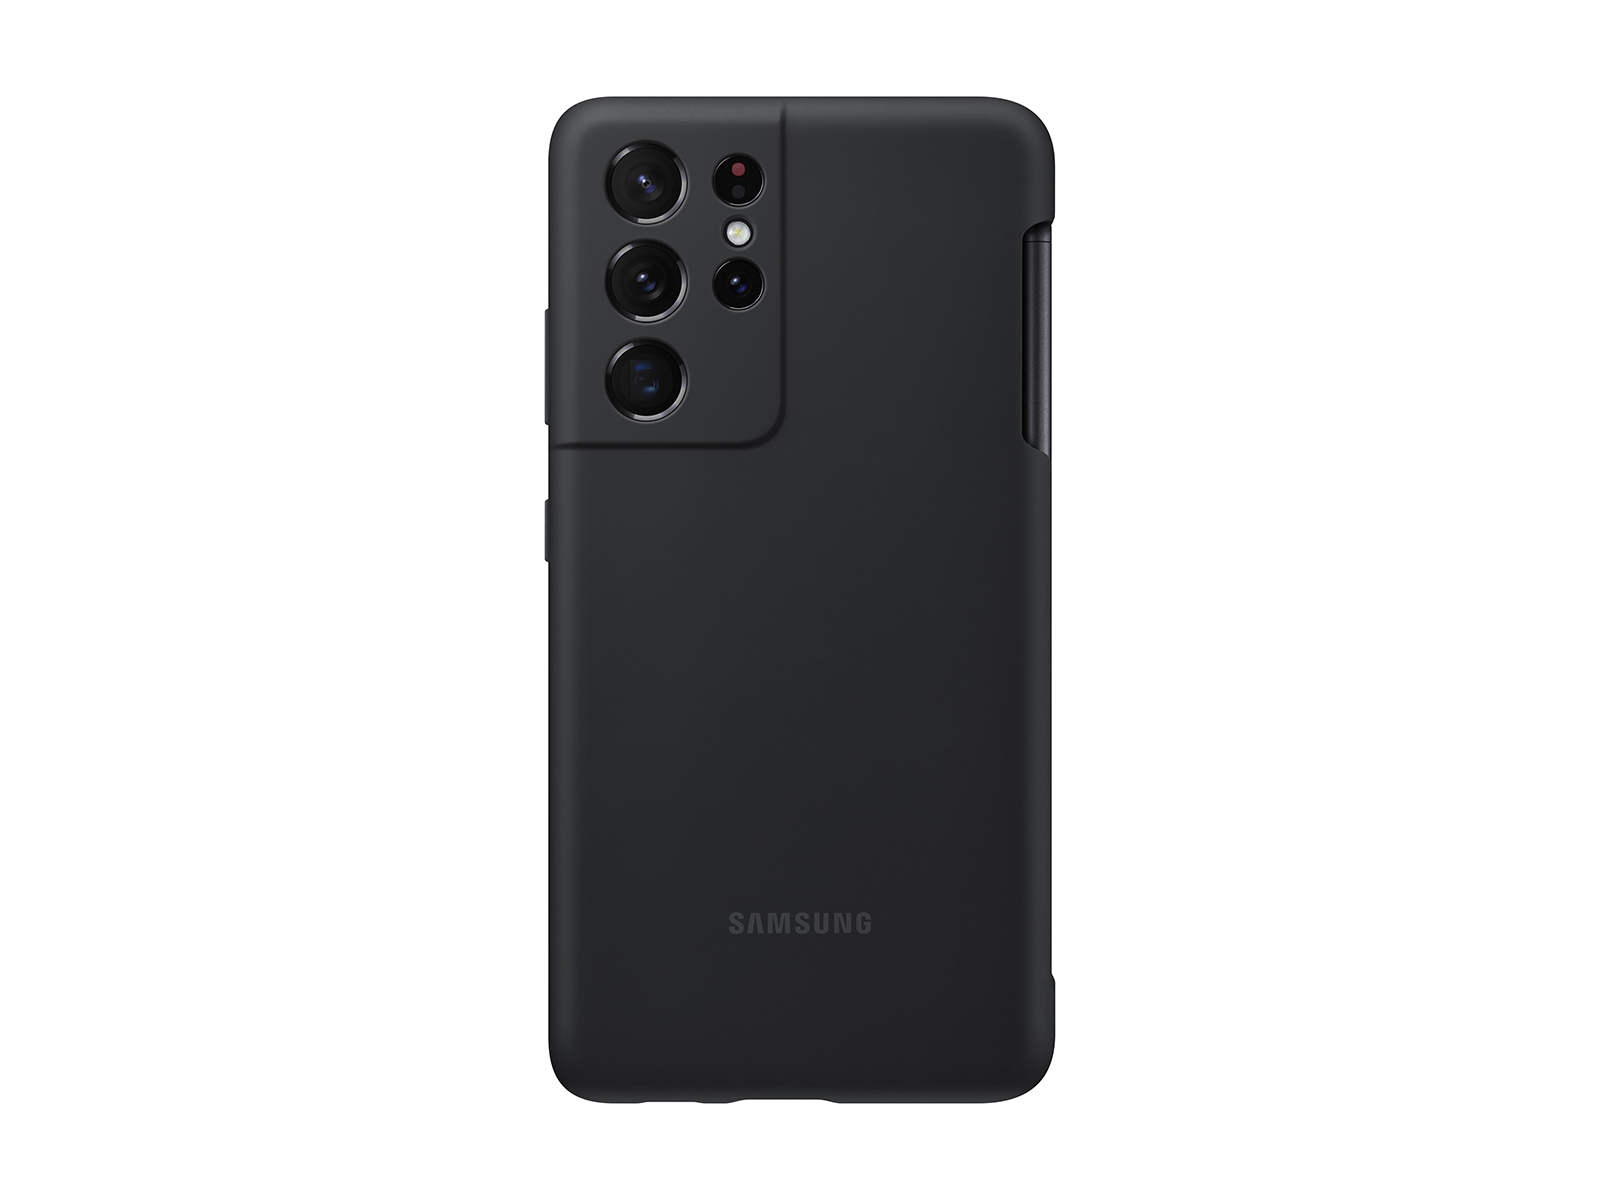 Samsung-Galaxy S21 Ultra 5G